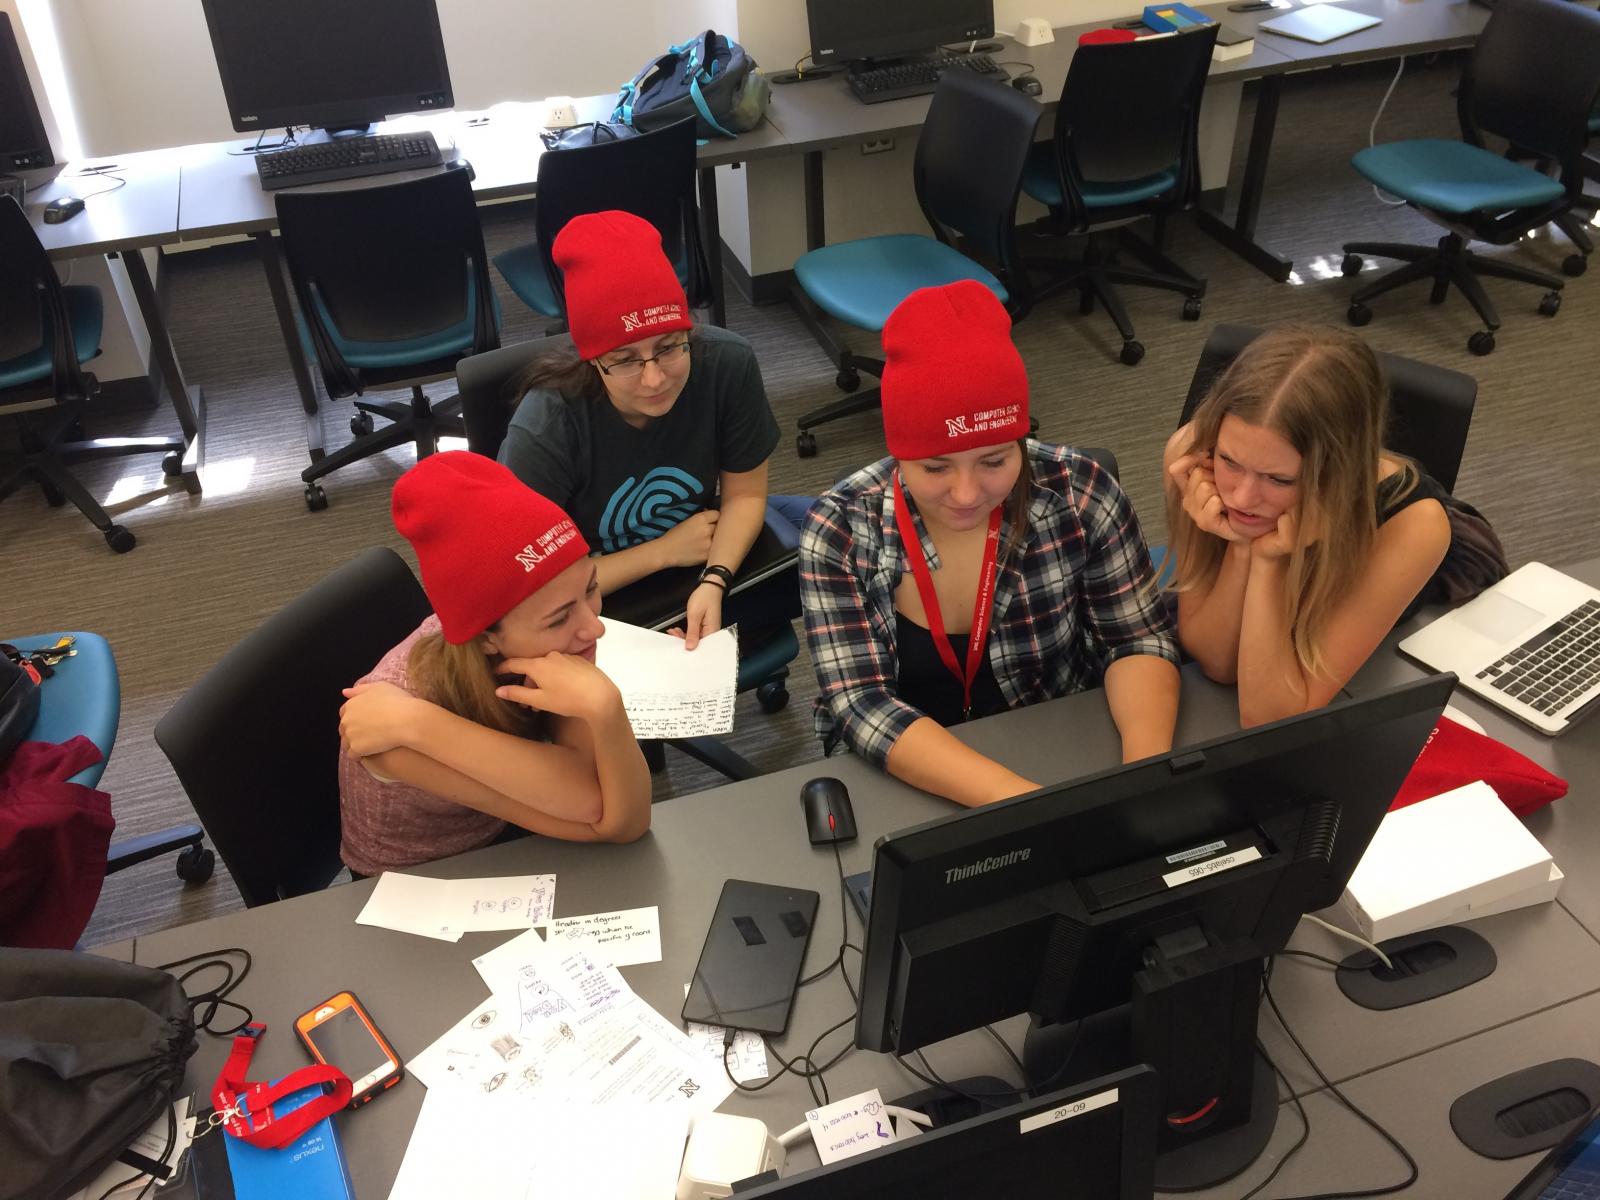 Students looking at a computer screen.